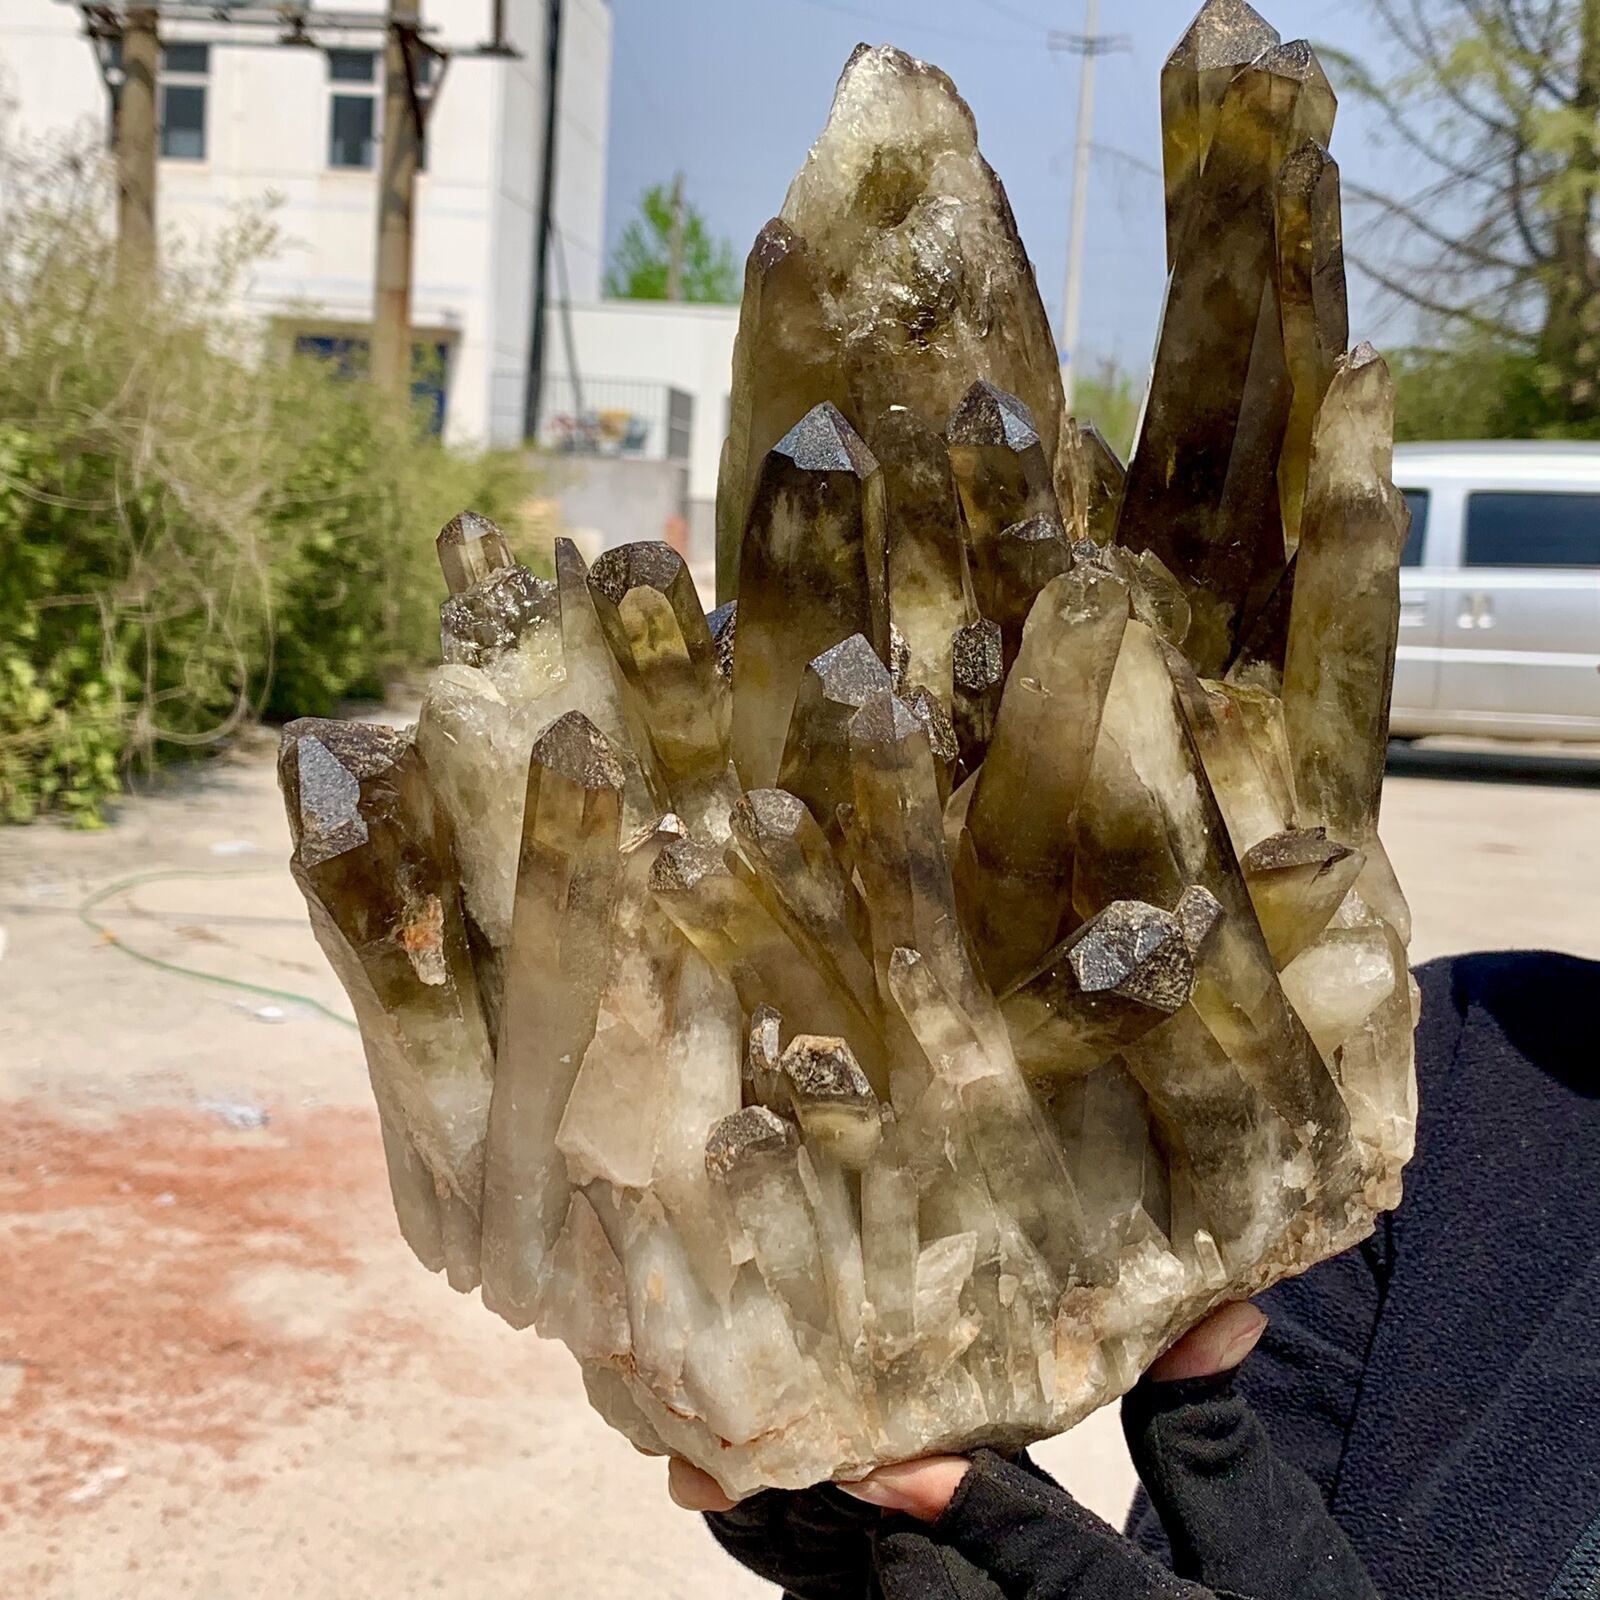 15LB Natural Citrine cluster mineral specimen quartz crystal healing